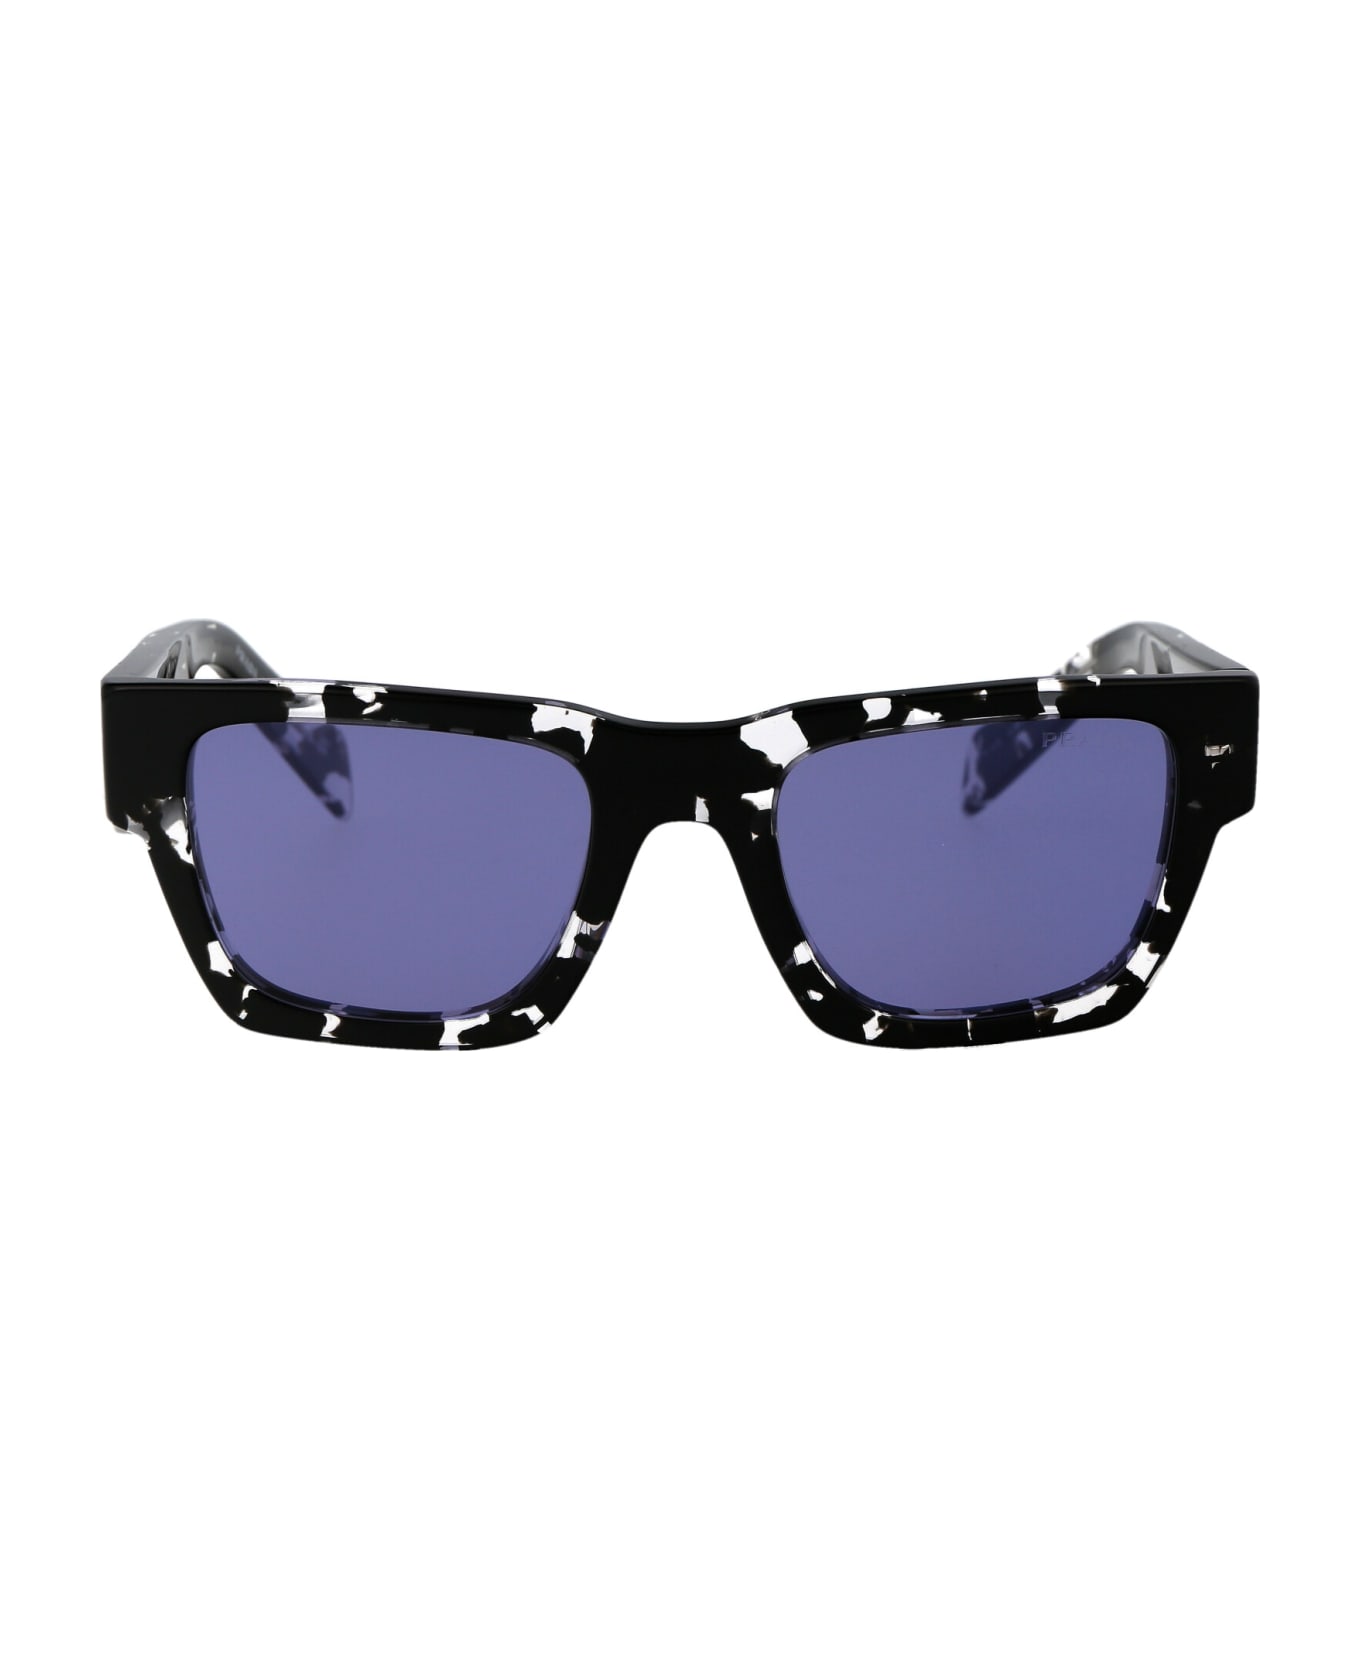 Prada Eyewear 0pr A06s Sunglasses - 15O50B Tortoise Black Crystal